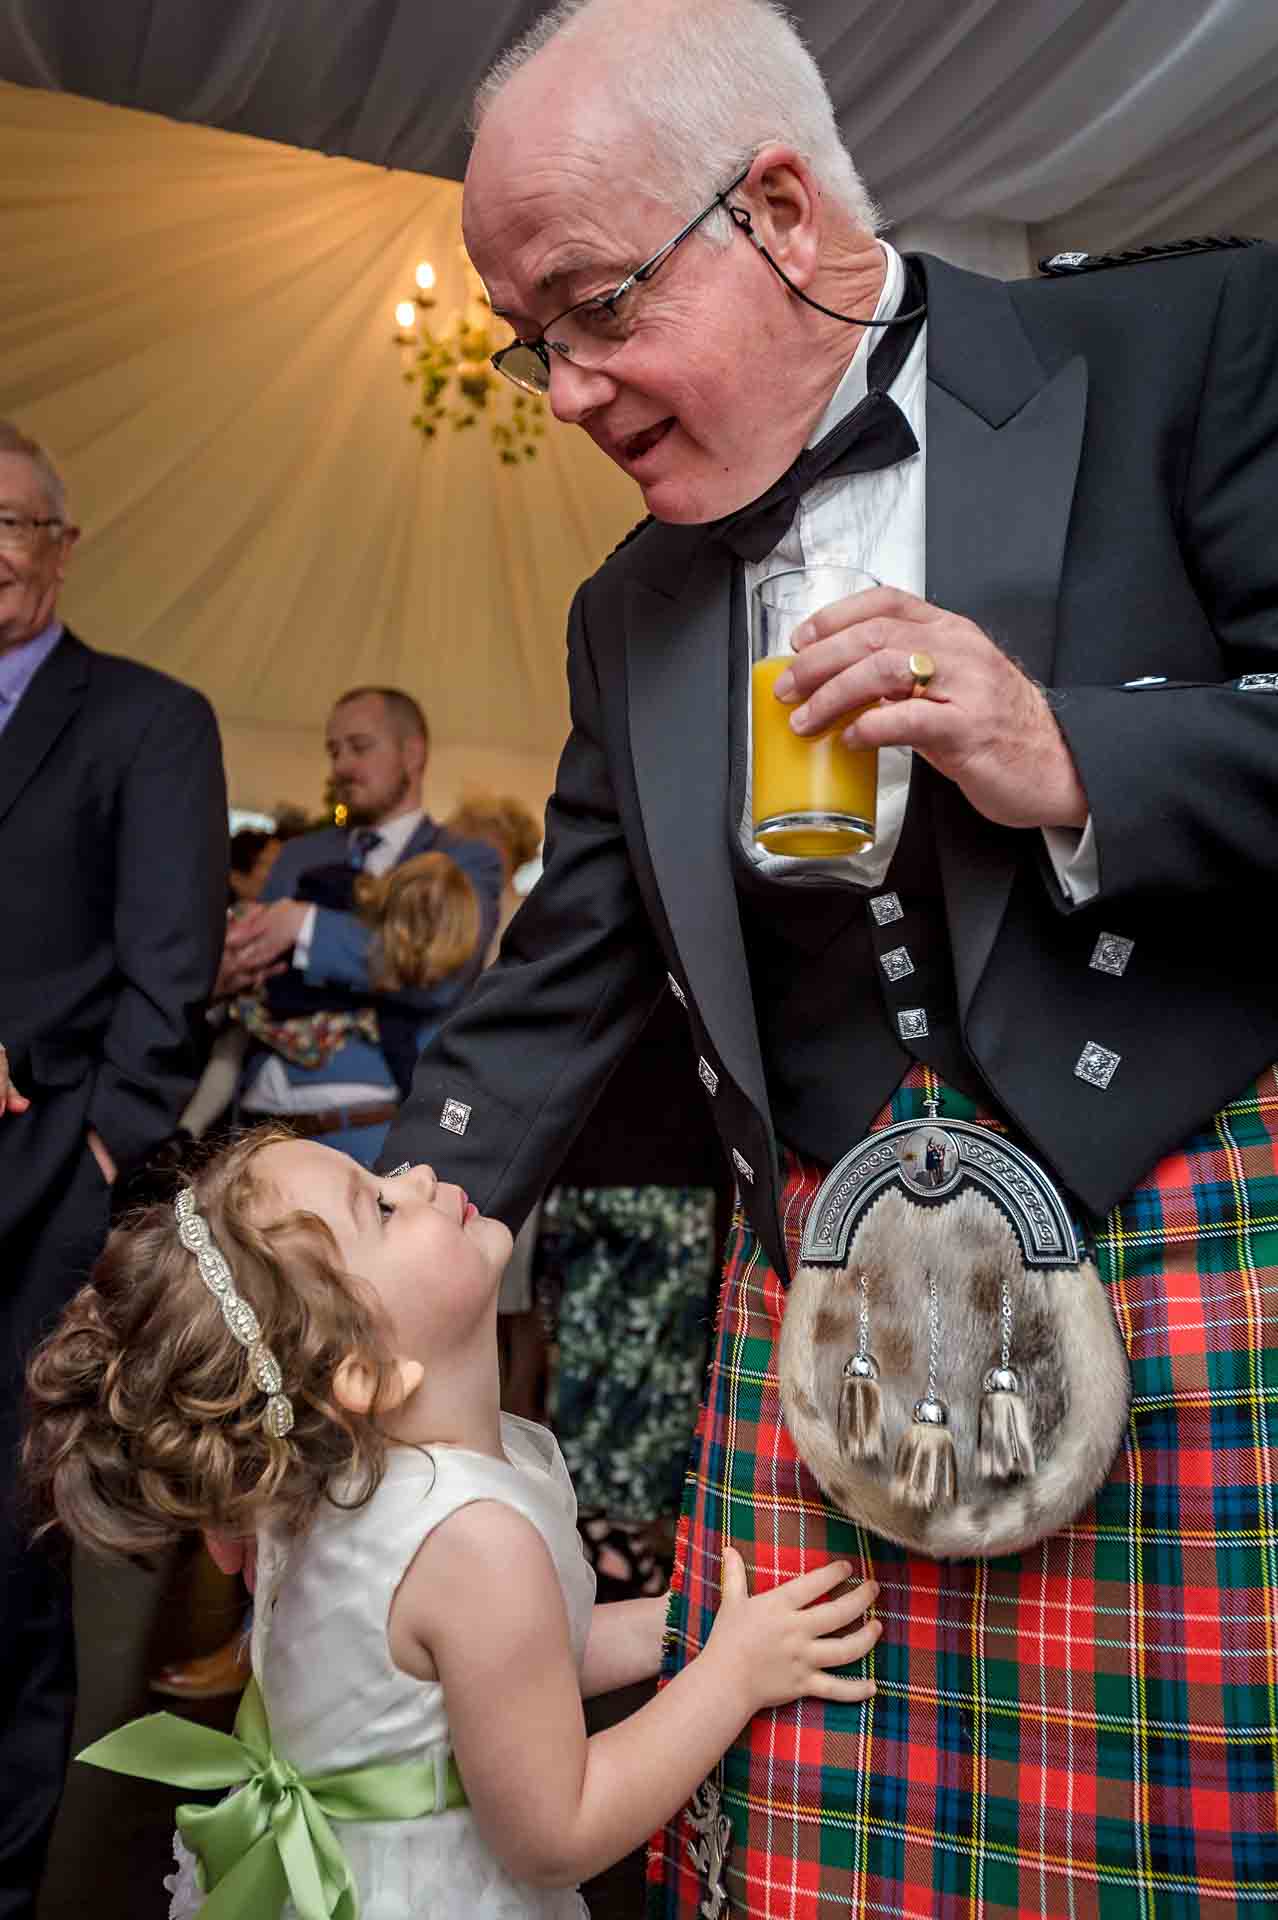 Small bridesmaid looking up at her grandfather in kilt at Llechwen Hall Hotel wedding reception